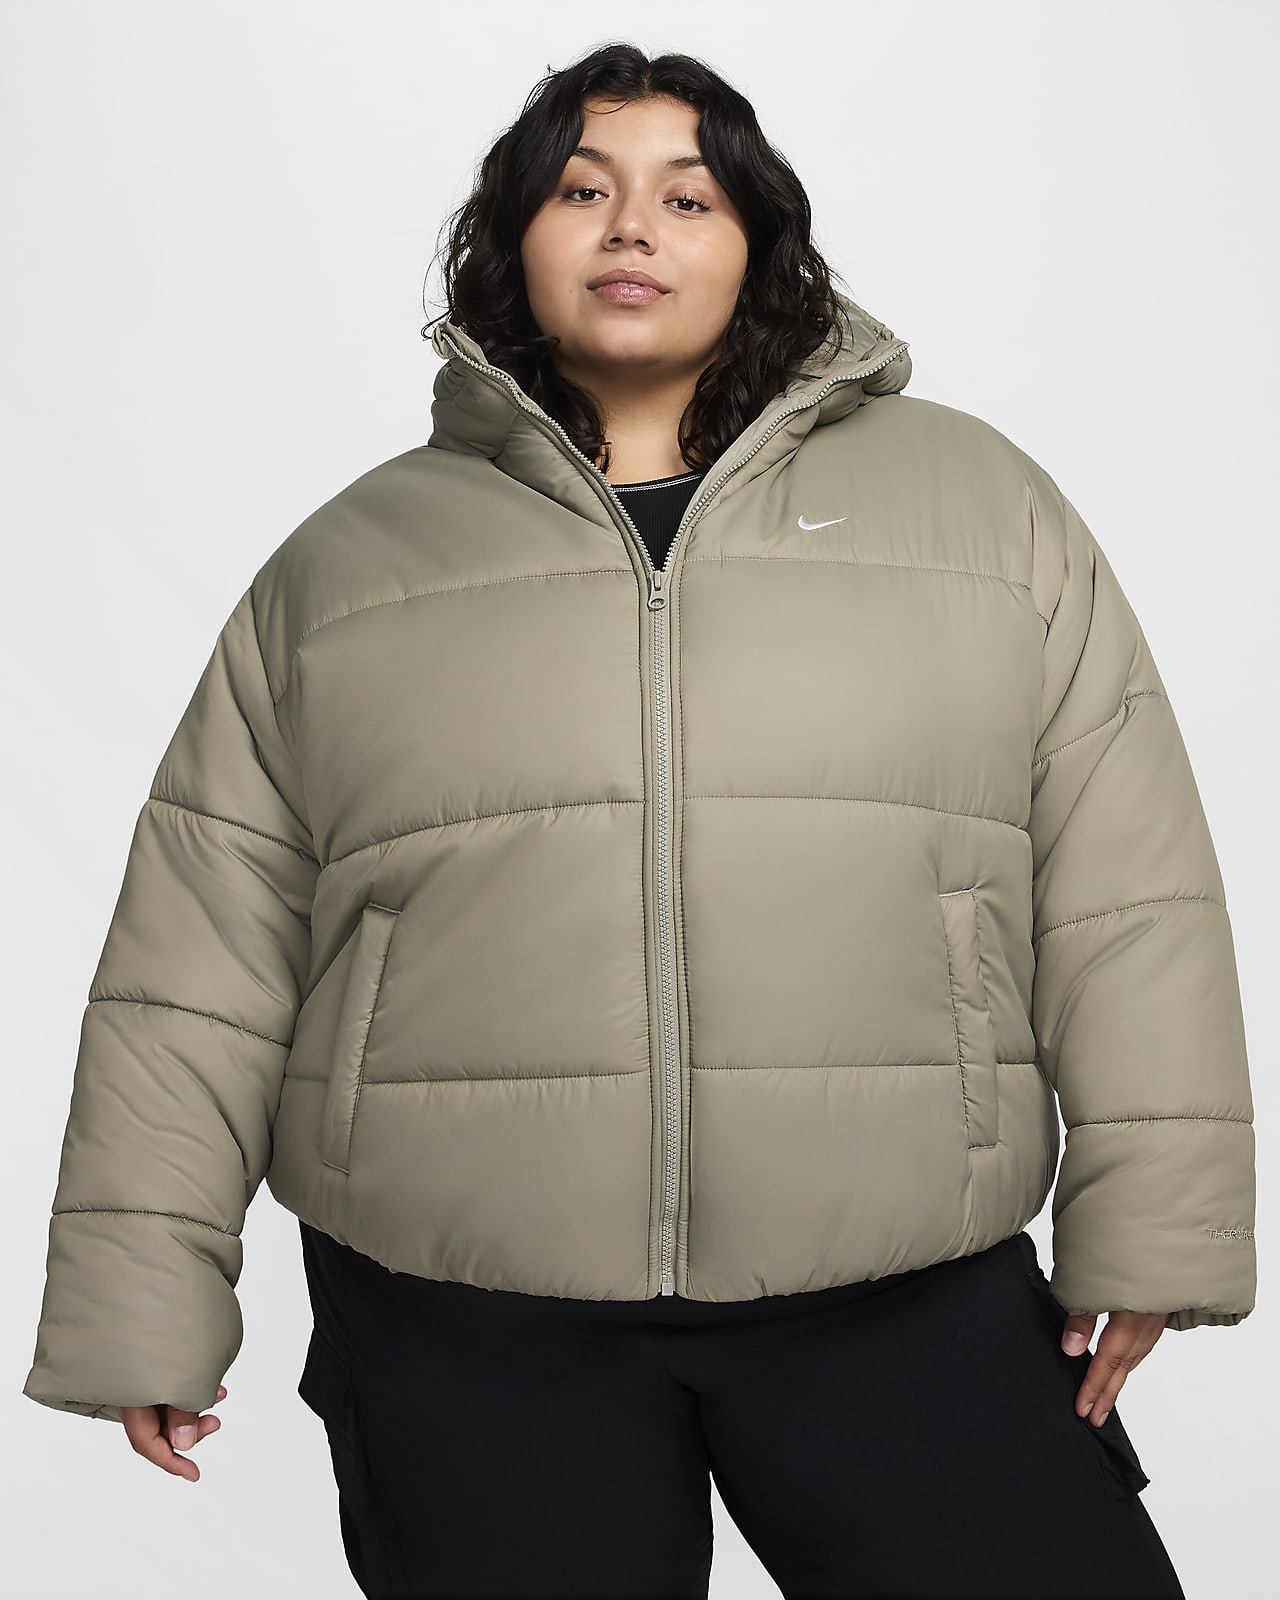 Nike Sportswear Classic Puffer Women's Therma-FIT Loose Hooded Jacket (Plus Size)